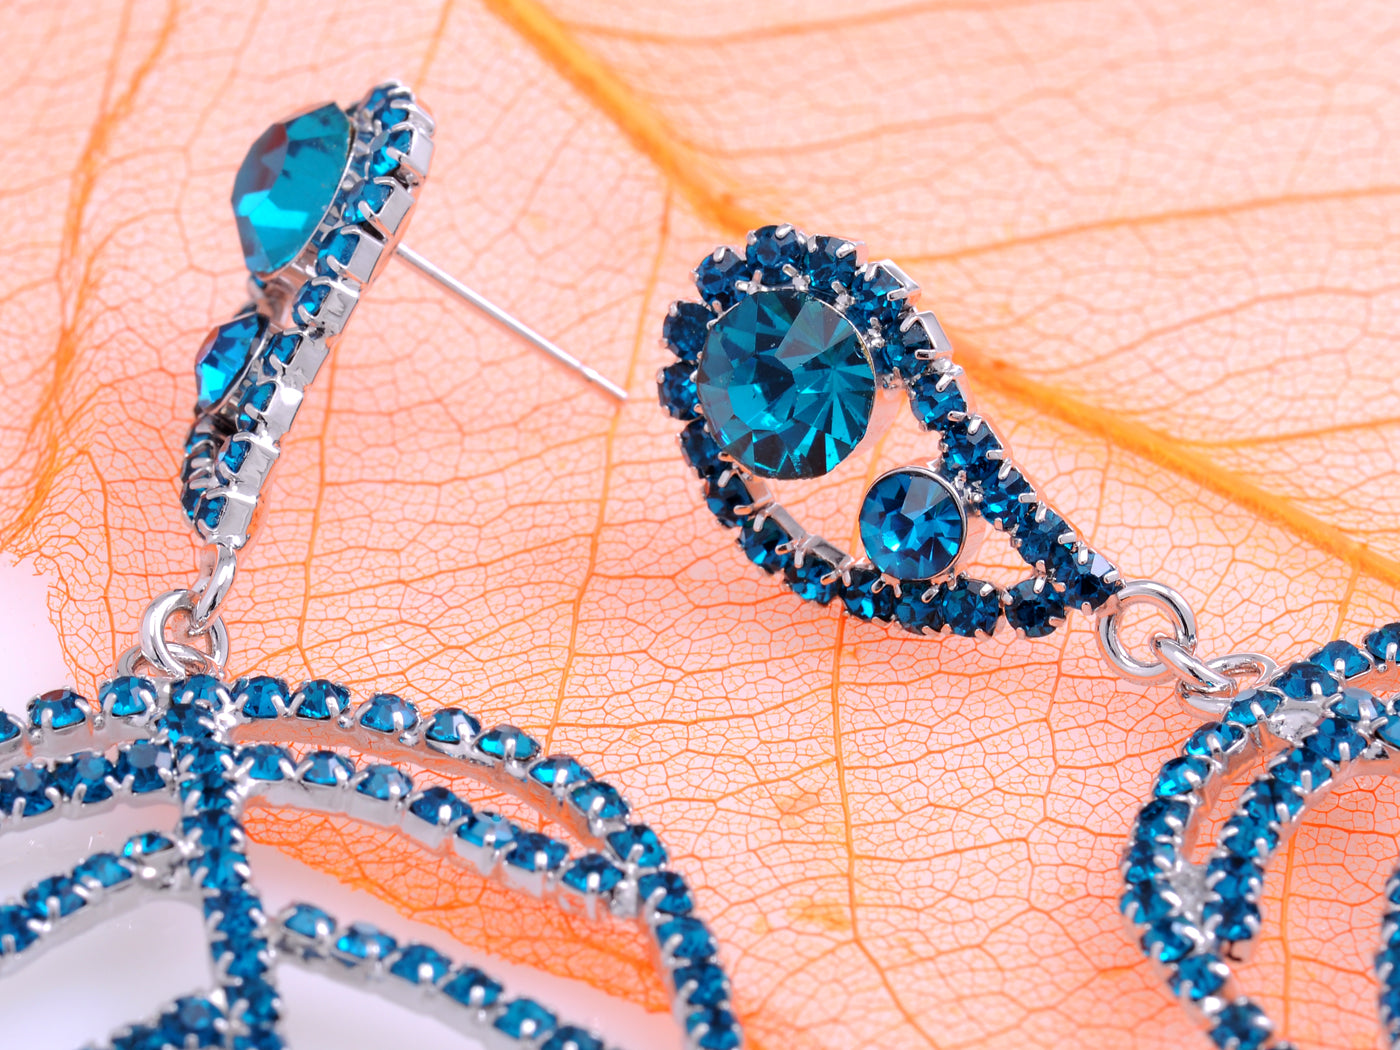 Swarovski Crystal Element Silver Sapphire Blue Colored Leaf Dangle Earring